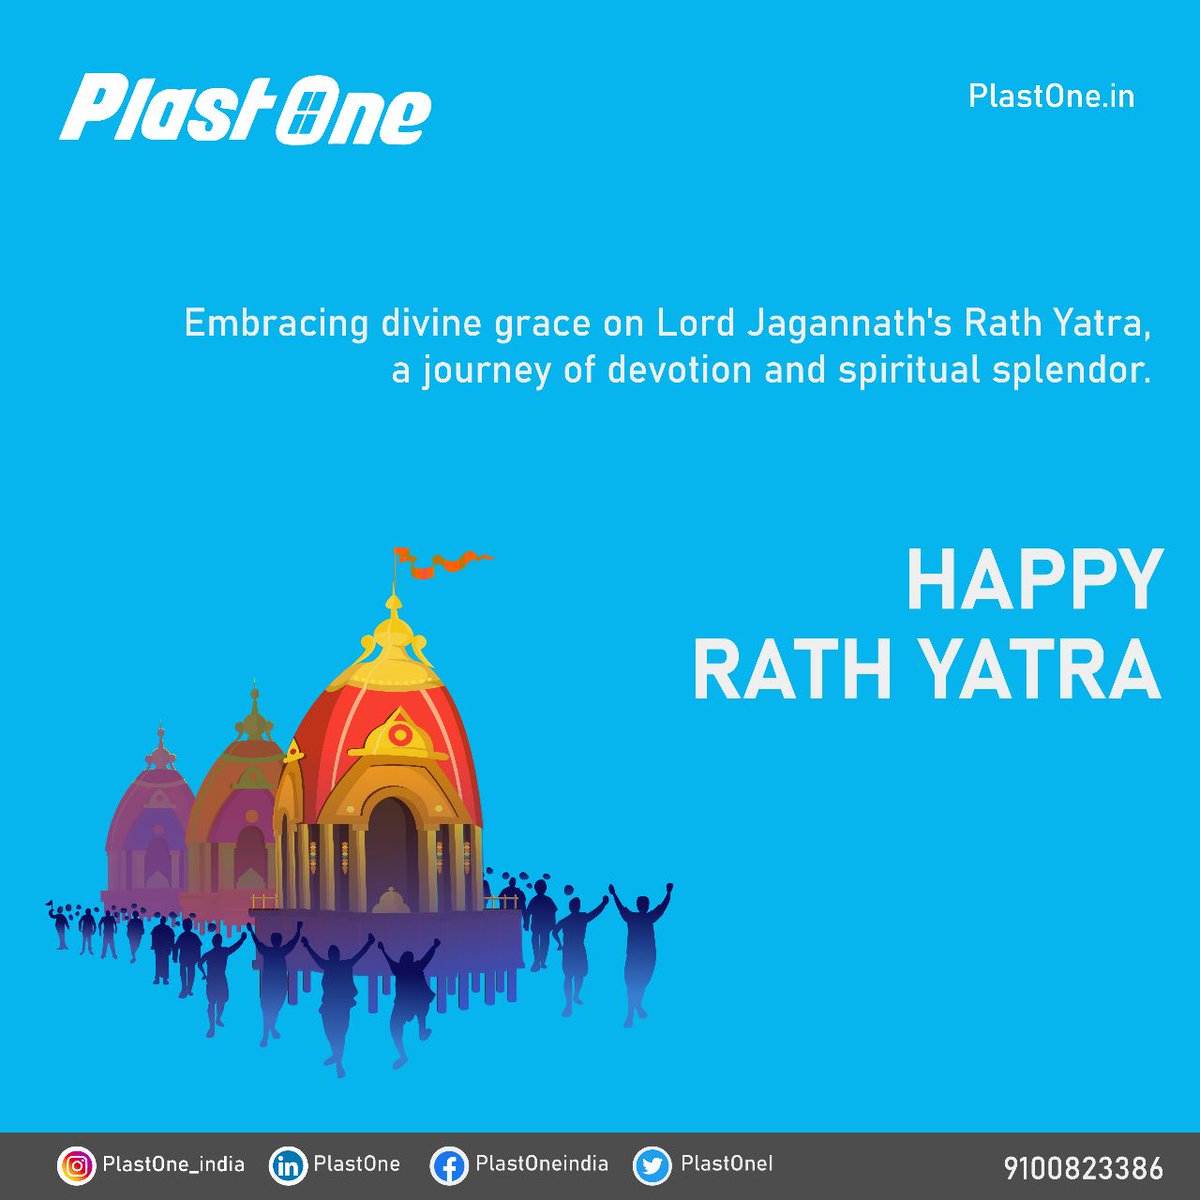 Embracing divine grace on Lord Jagannath's Rath Yatra, a journey of devotion and spiritual splendor.

HAPPY RATH YATRA

#plastone #upvc #upvcwindows #upvcdoors  #india #construction #buildingcomponents #aesthetics #buildingmaterial #upvcprofiles #rathyatra #jagannath #puri